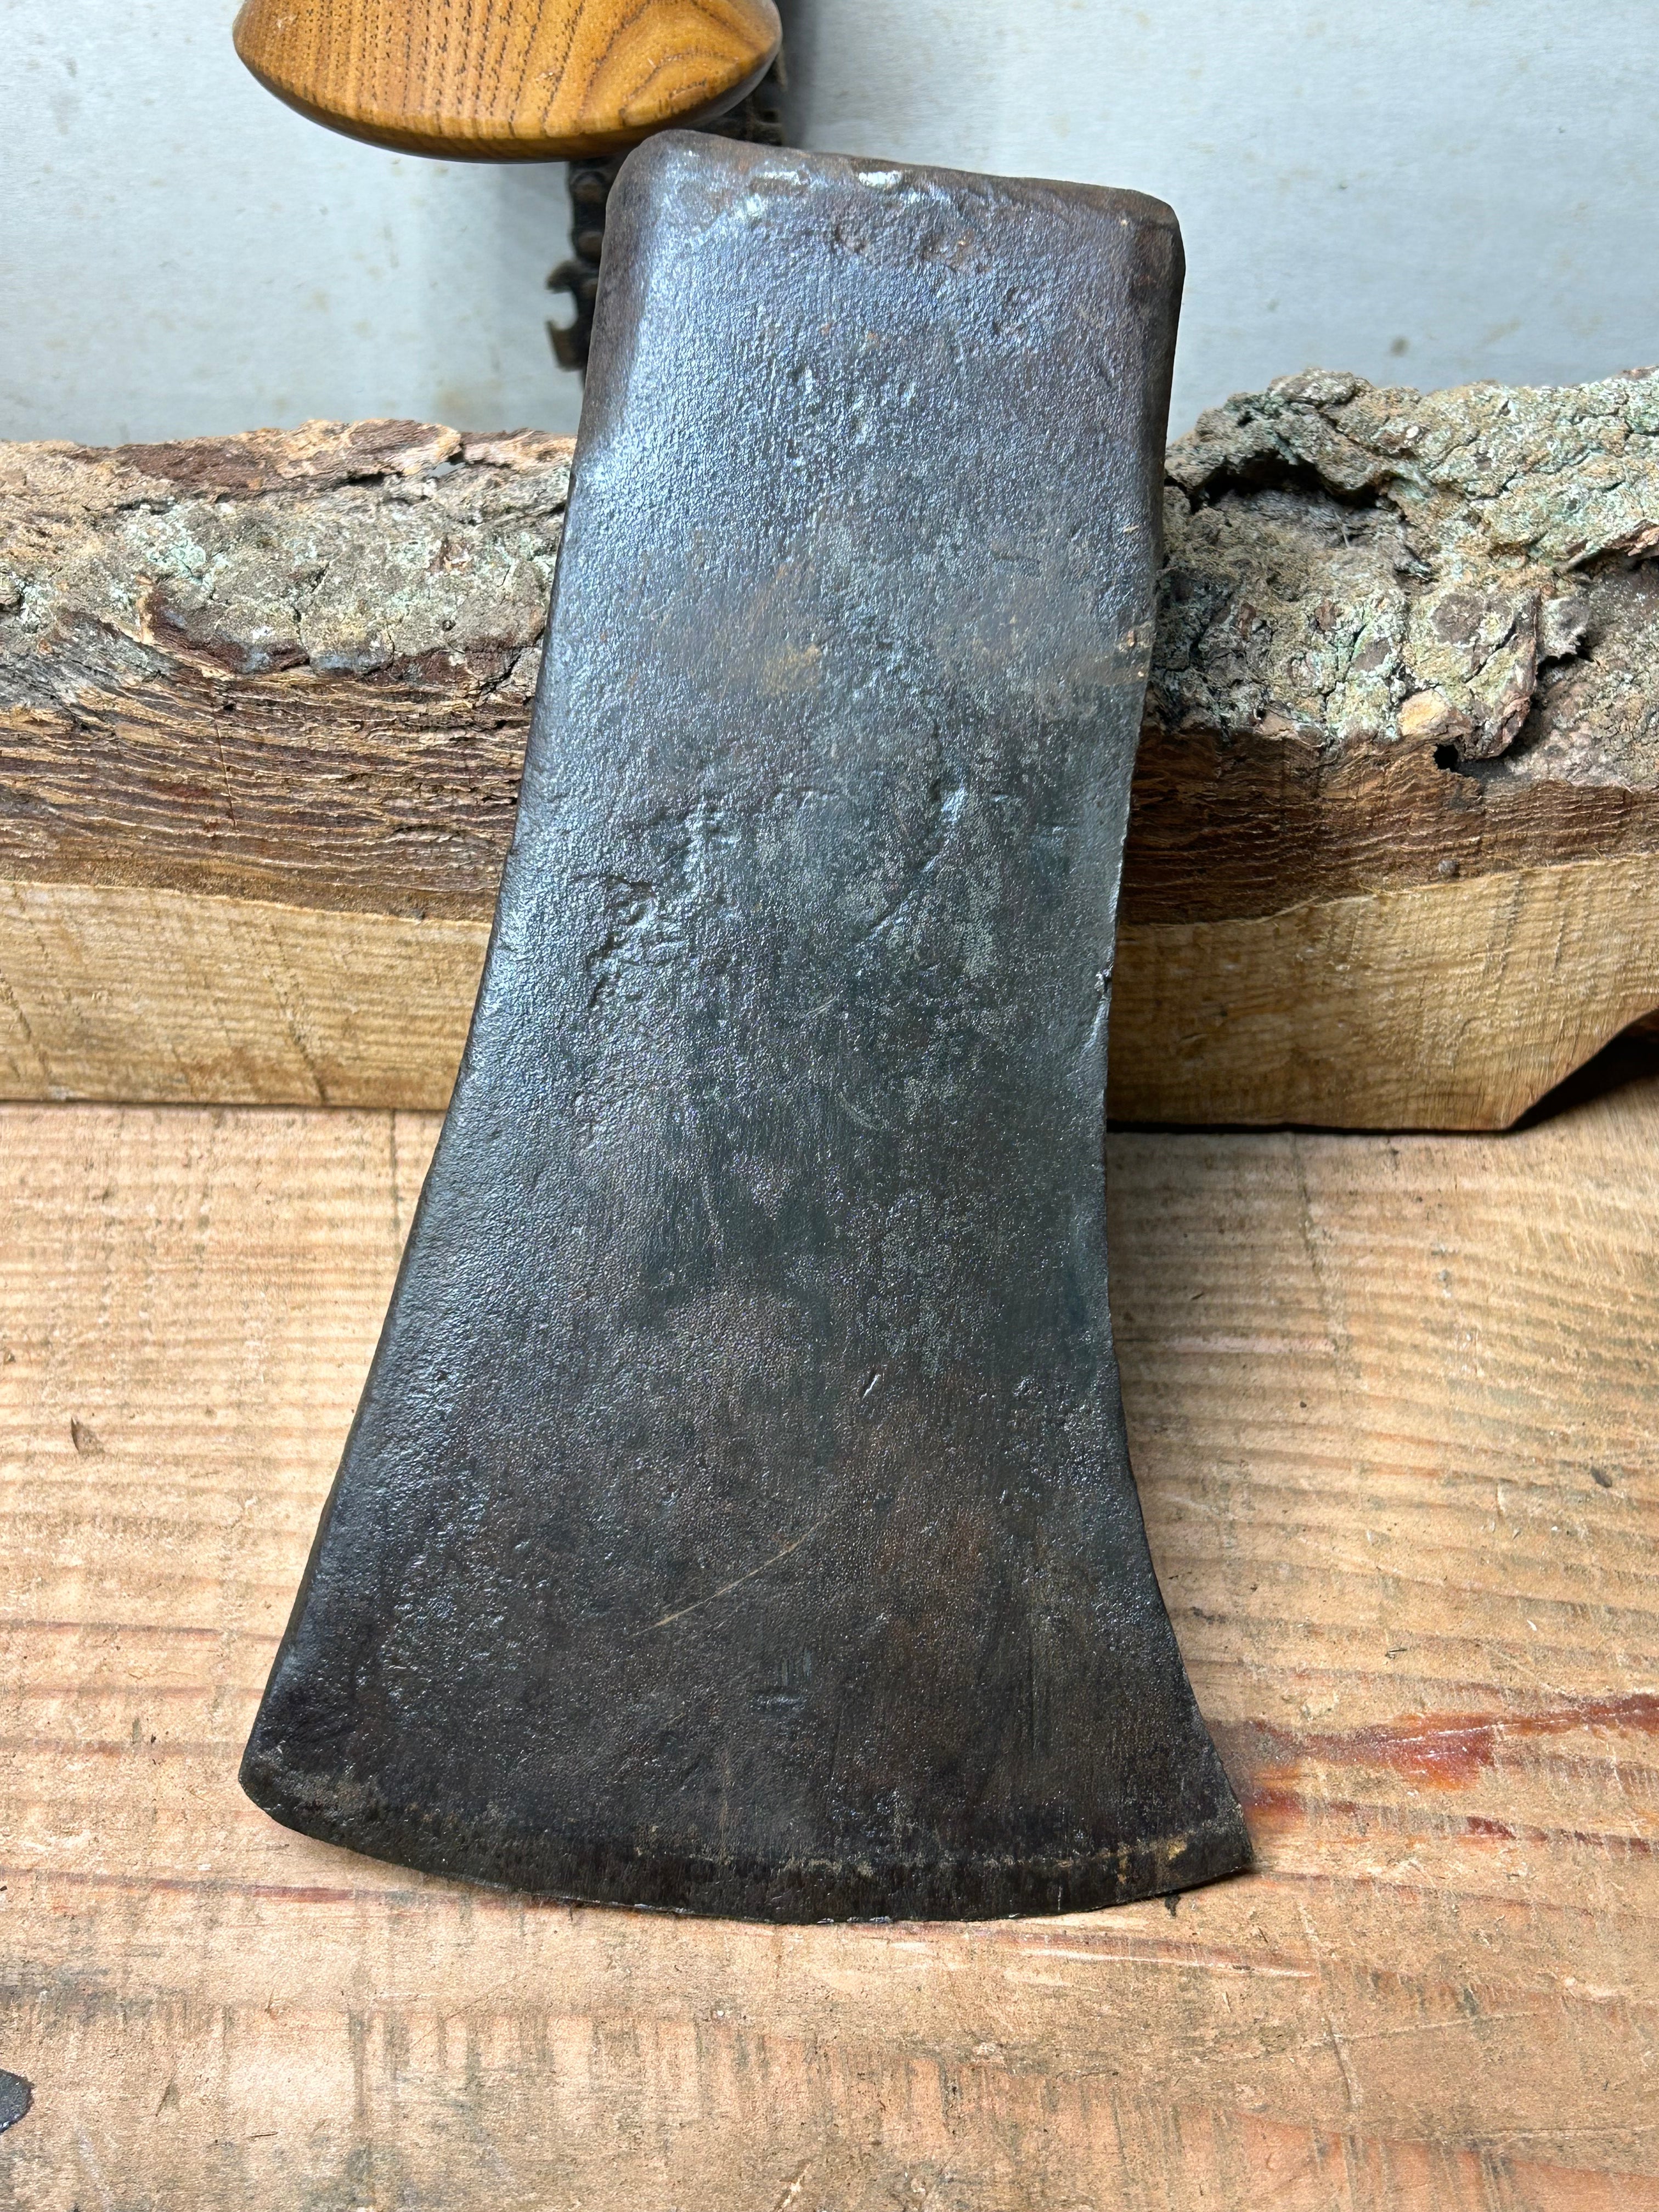 Vintage Mann 5lb Rafting pattern axe head - 0